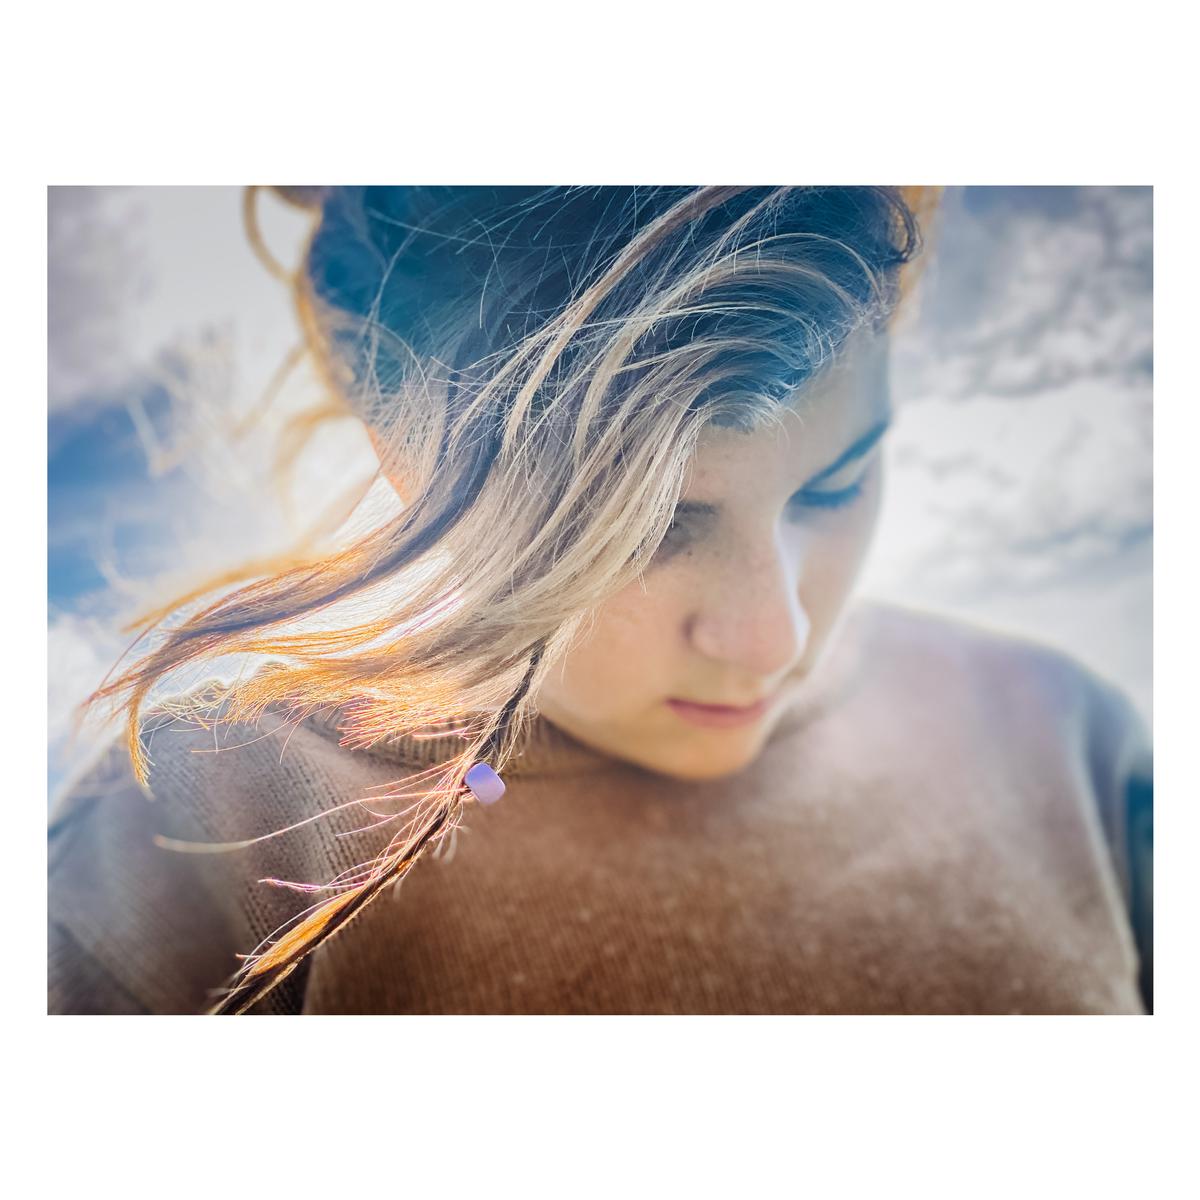 Melissa Jackson; Enjoying the sunshine;Captured on a bubble walk, a lone hair bead captures the light